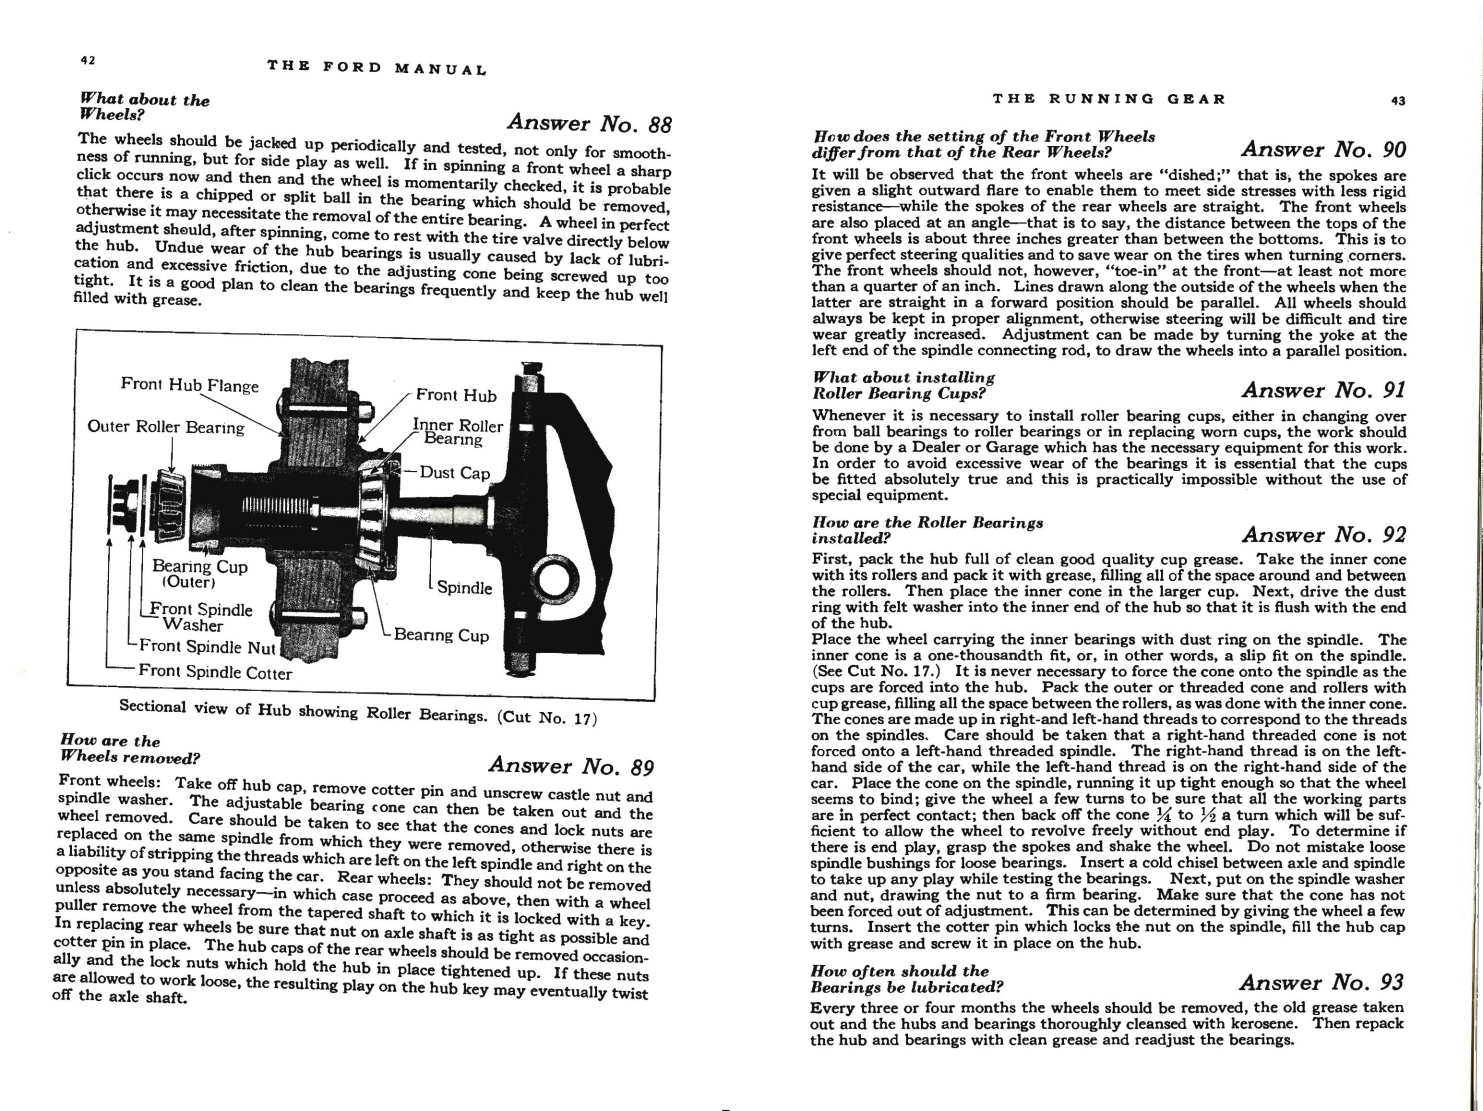 n_1924 Ford Owners Manual-42-43.jpg